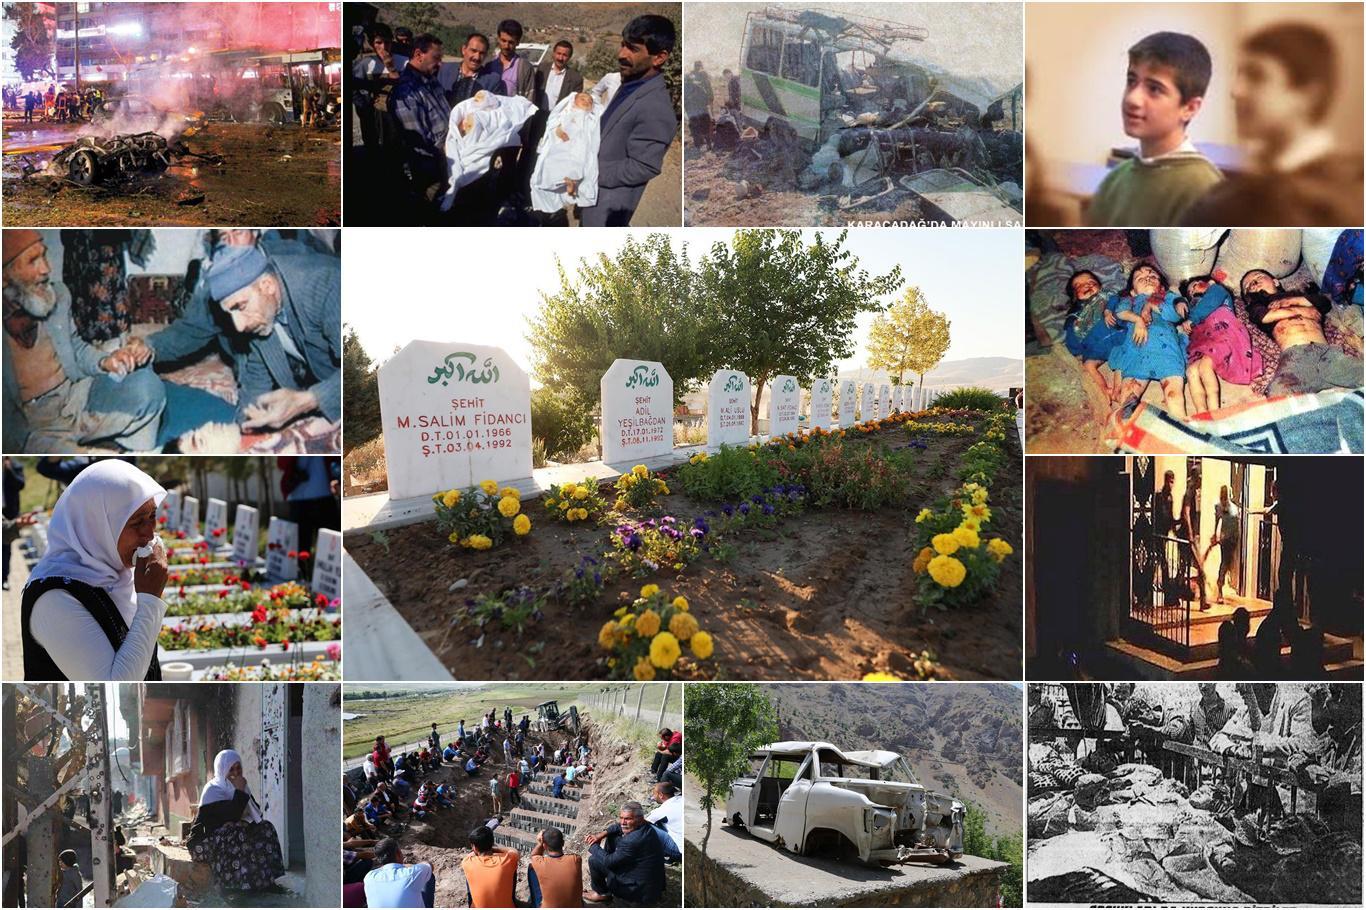 History of PKK's massacres